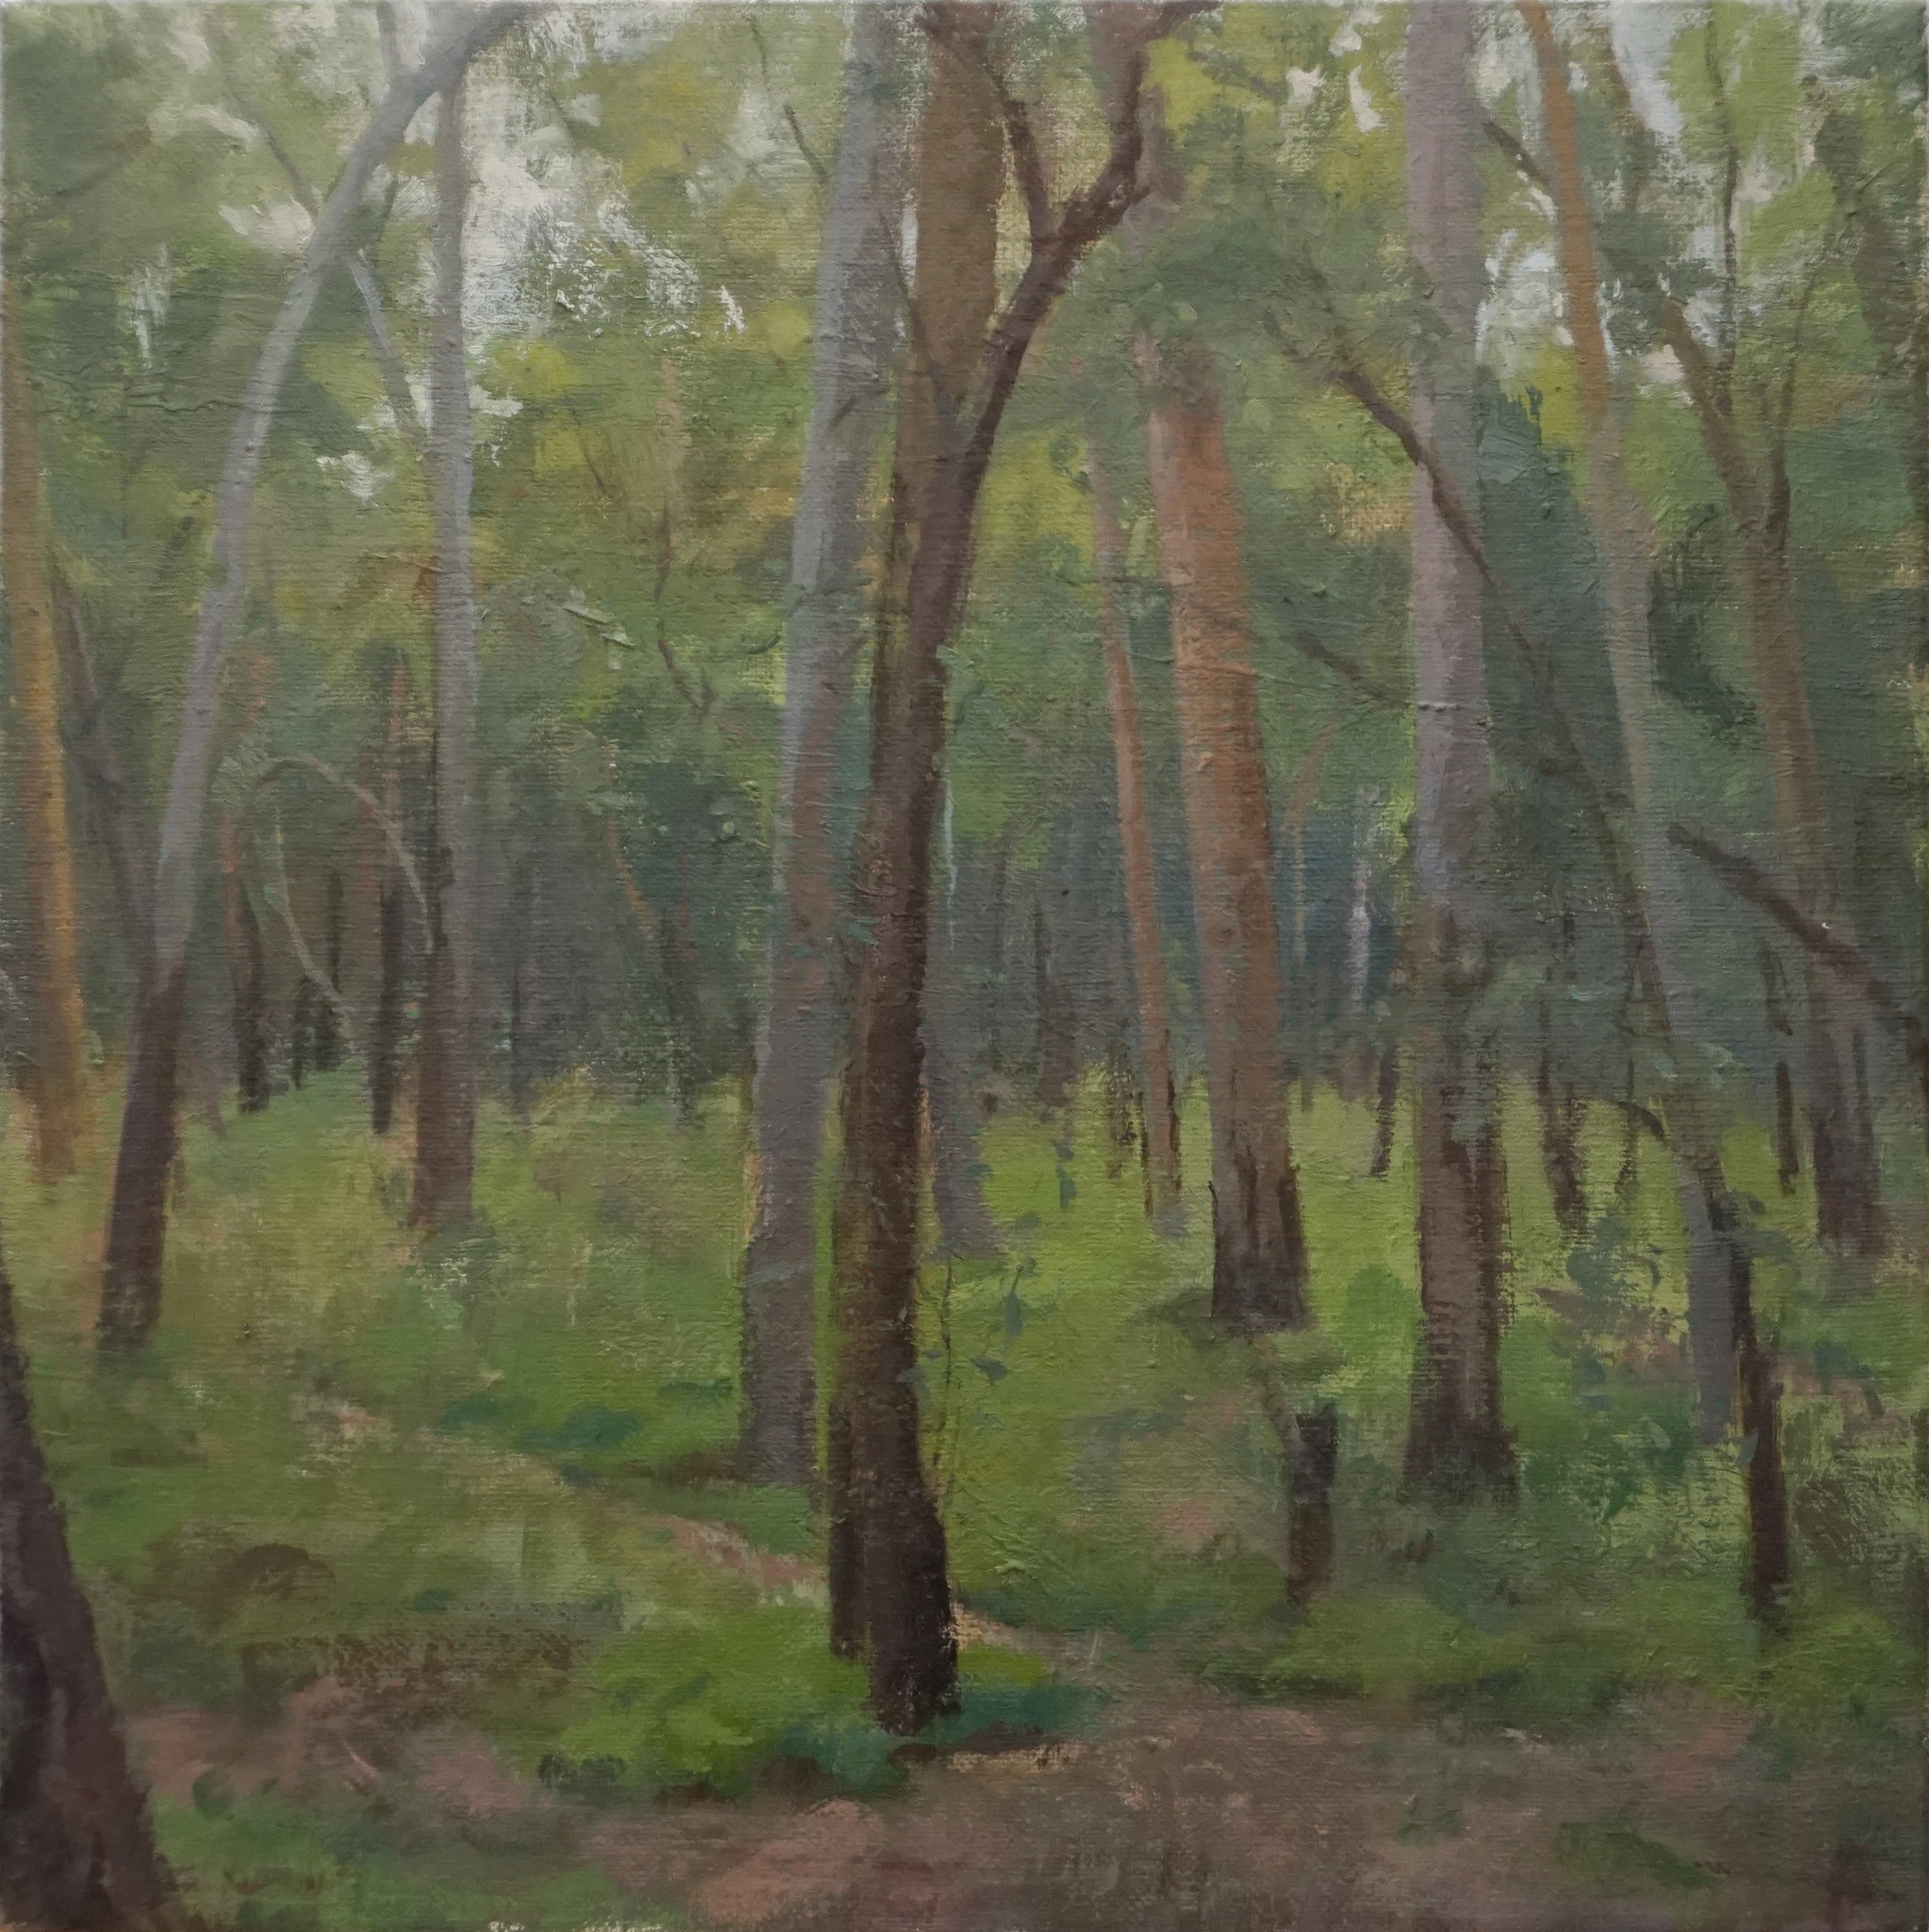  Oil on Canvas, 30x30 cm, 2018 